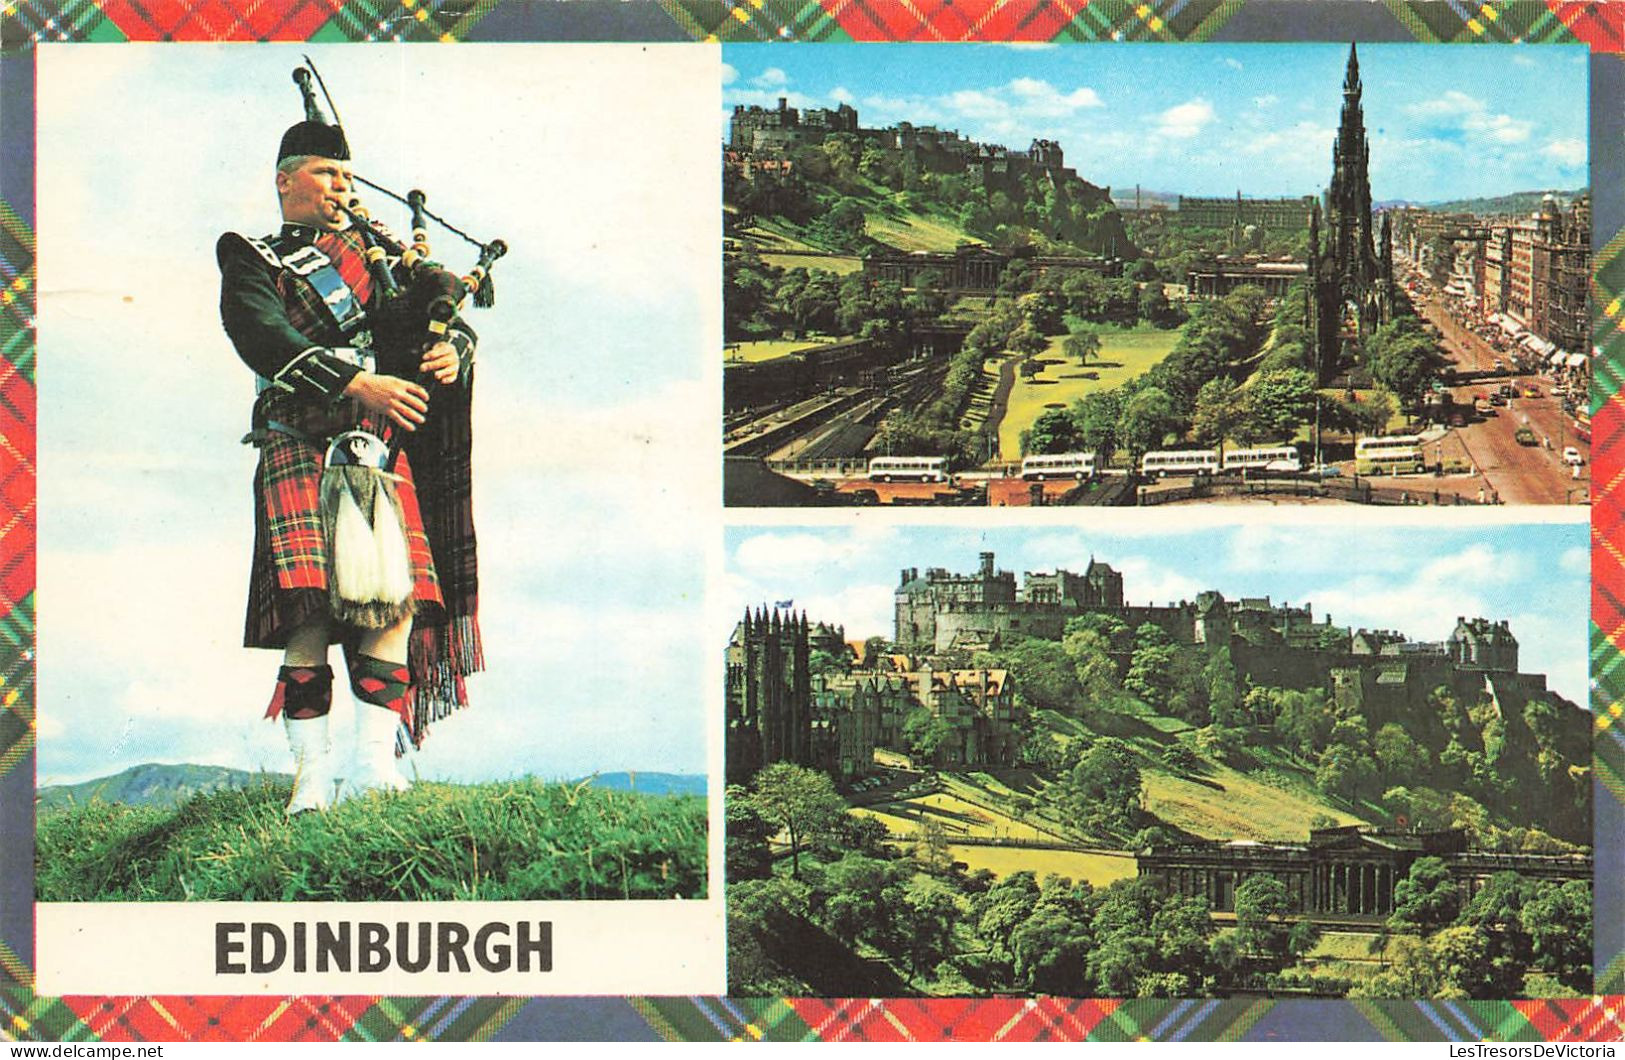 ROYAUME UNI - Ecosse - Edinburgh - Princes Street And The Scott Monument The Castle - Carte Postale - Midlothian/ Edinburgh